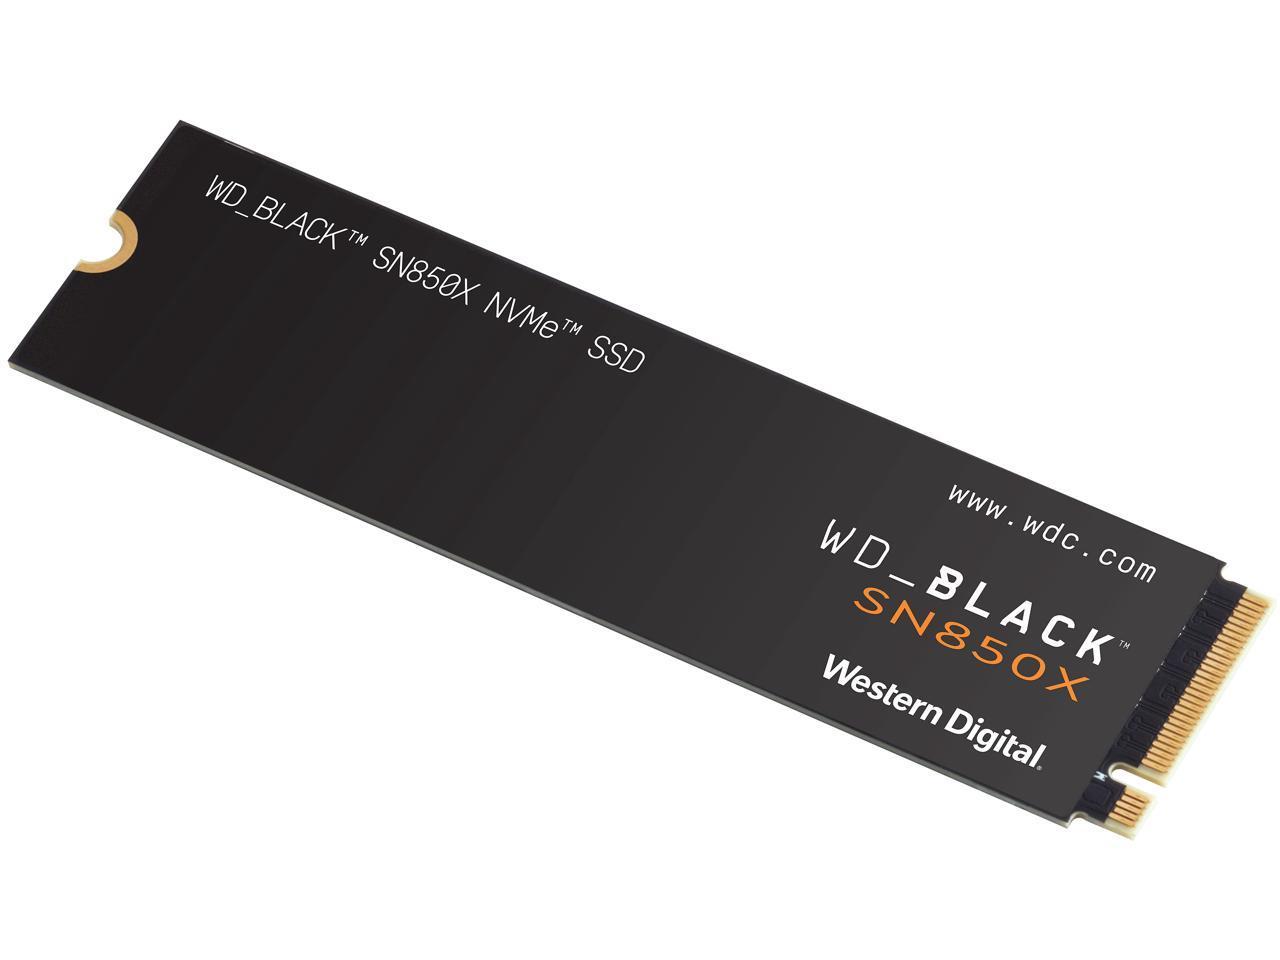 WESTERN DIGITAL BLACK SN850X NVME SSD M.2 2TB